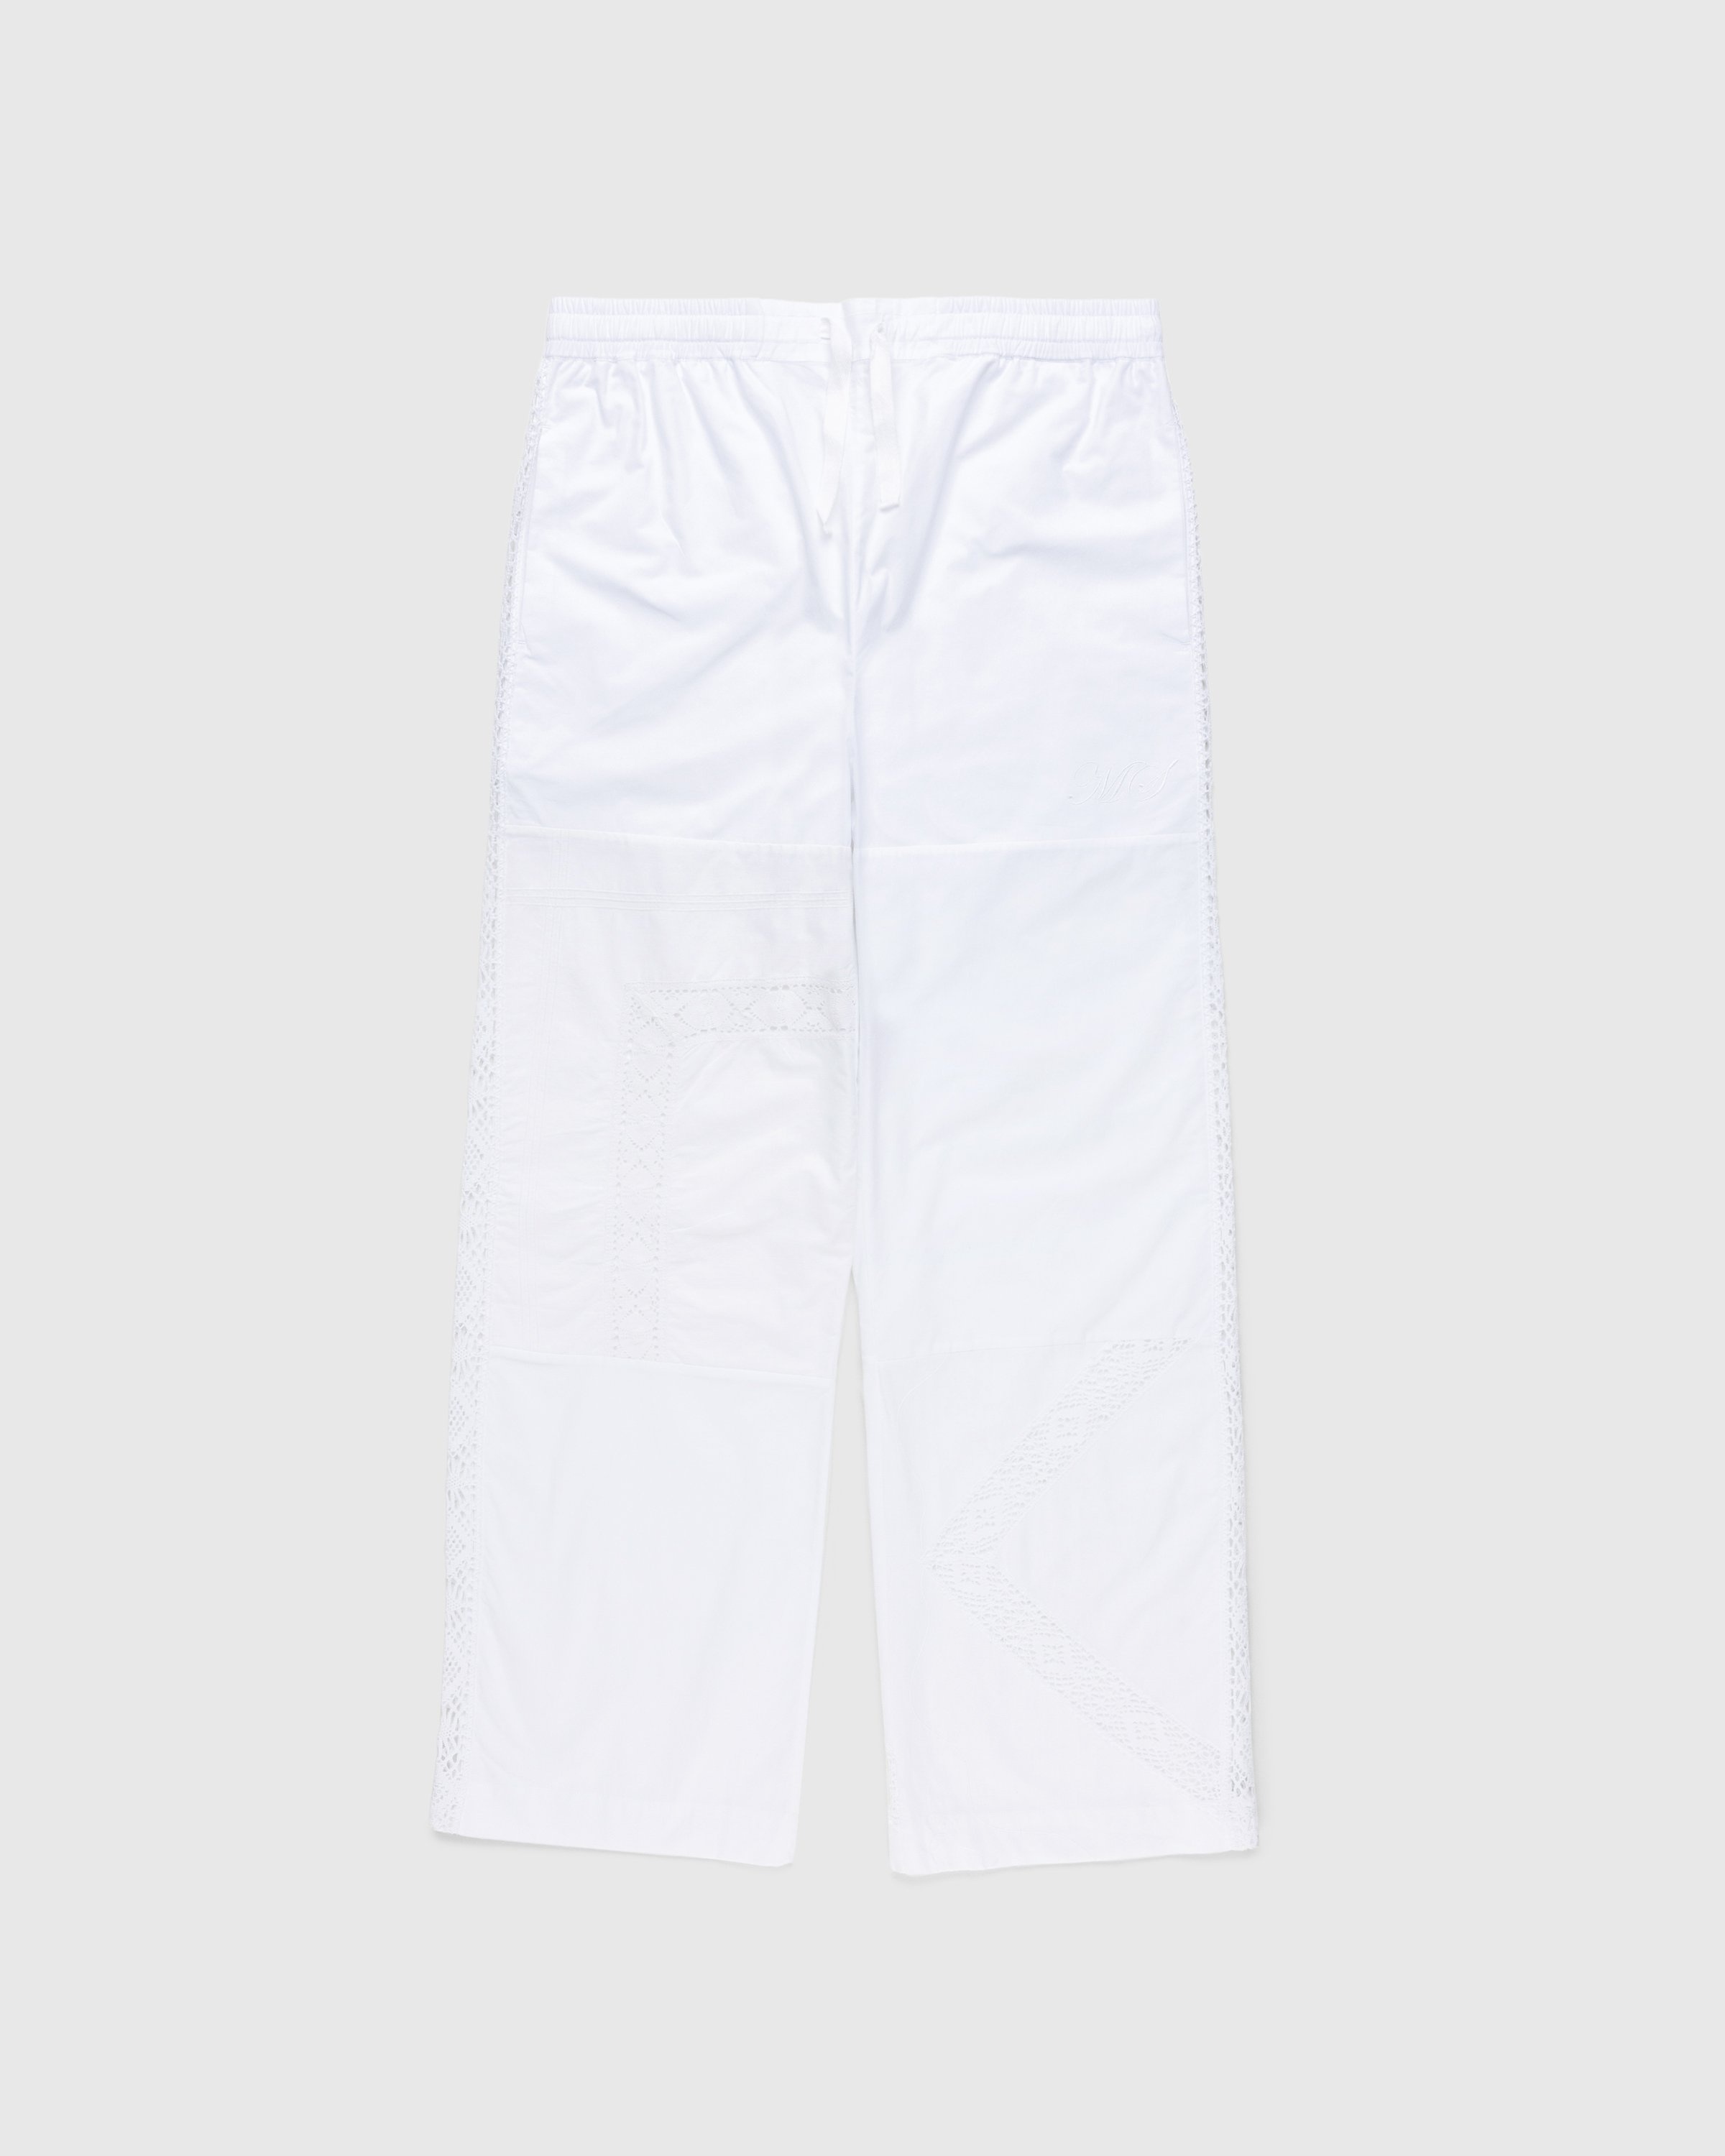 Marine Serre – Regenerated Household Linen Pajama Pants White - Pants - White - Image 1